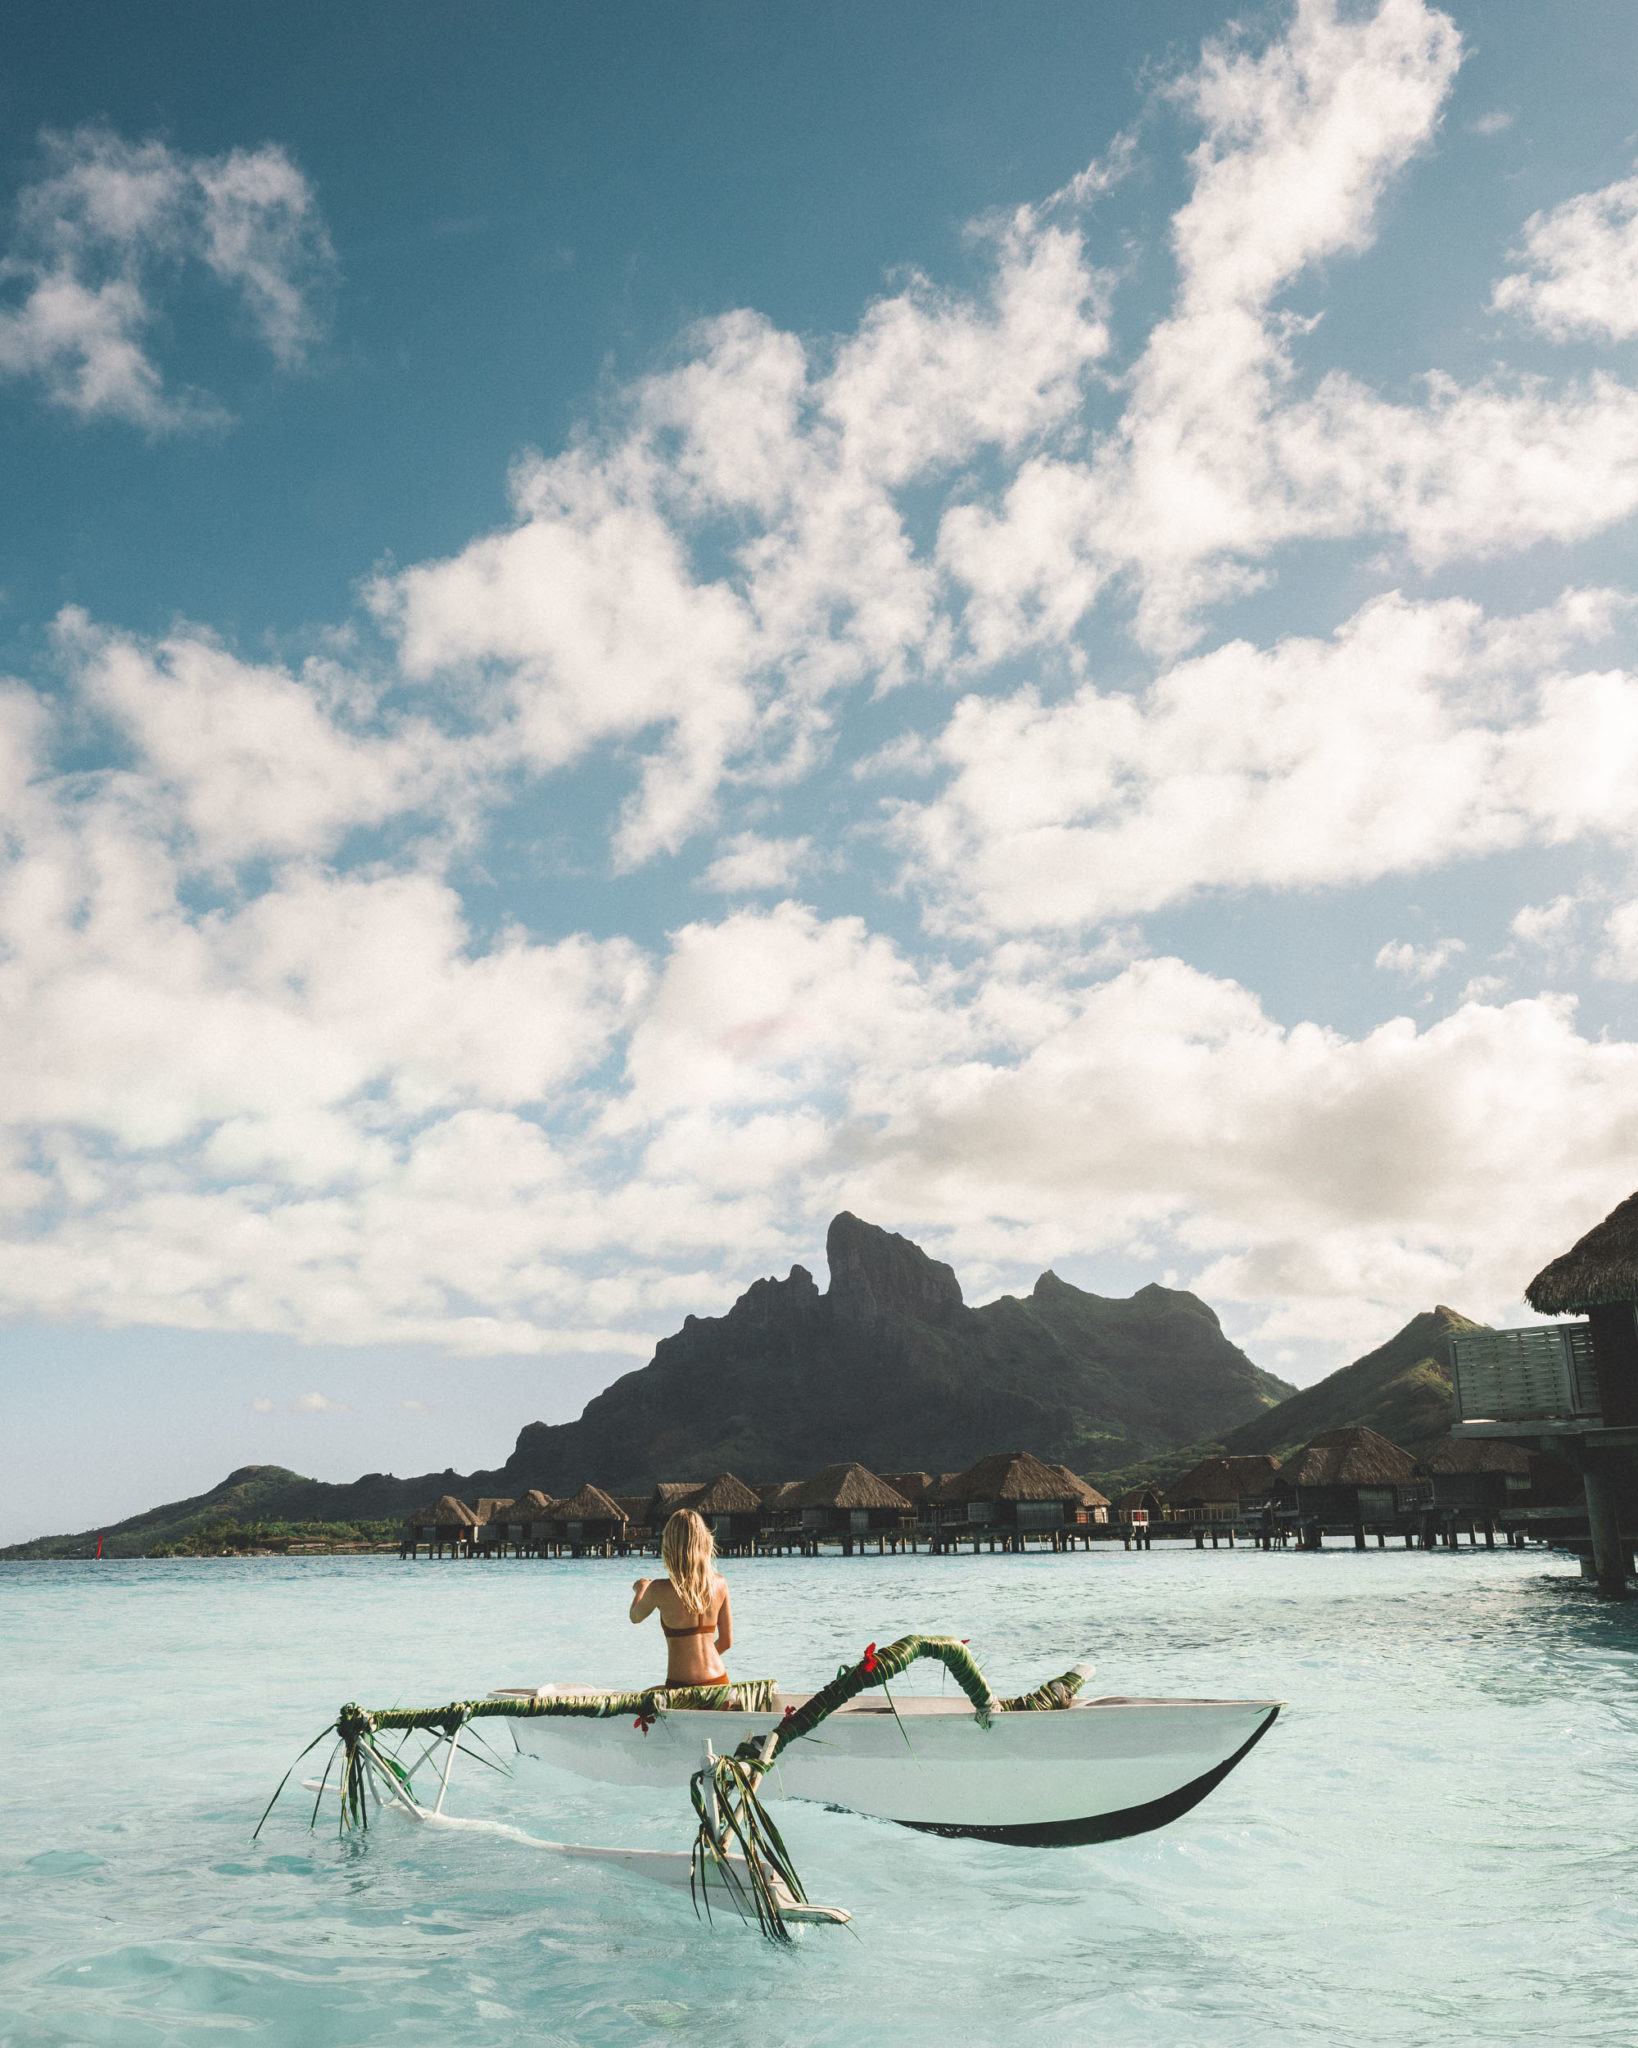 Canoeing at Four Seasons Bora Bora for our honeymoon via @finduslost